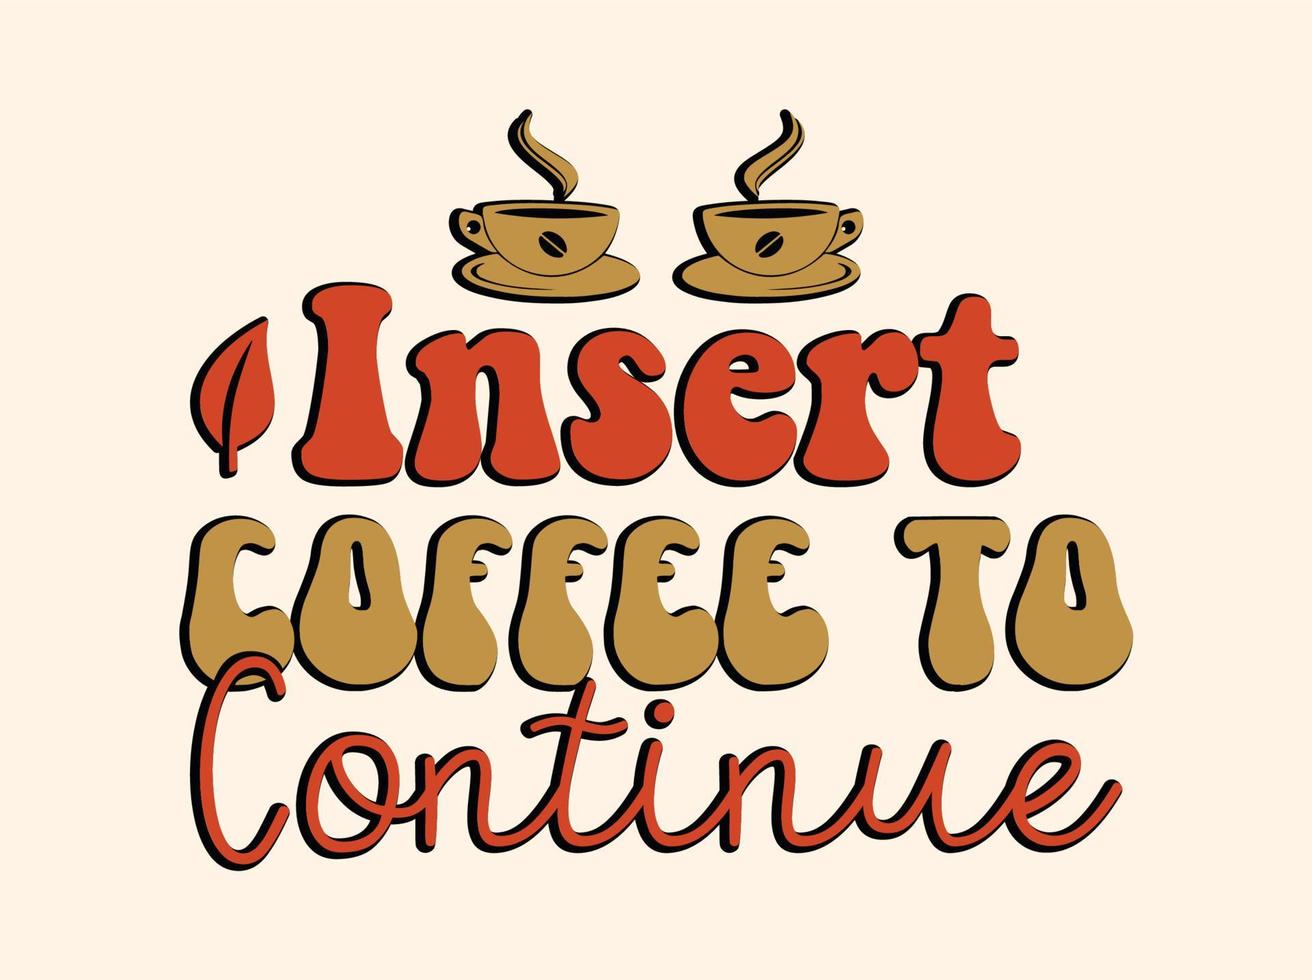 Trendy coffee tshirt design, vintage typography and lettering art, retro slogan vector